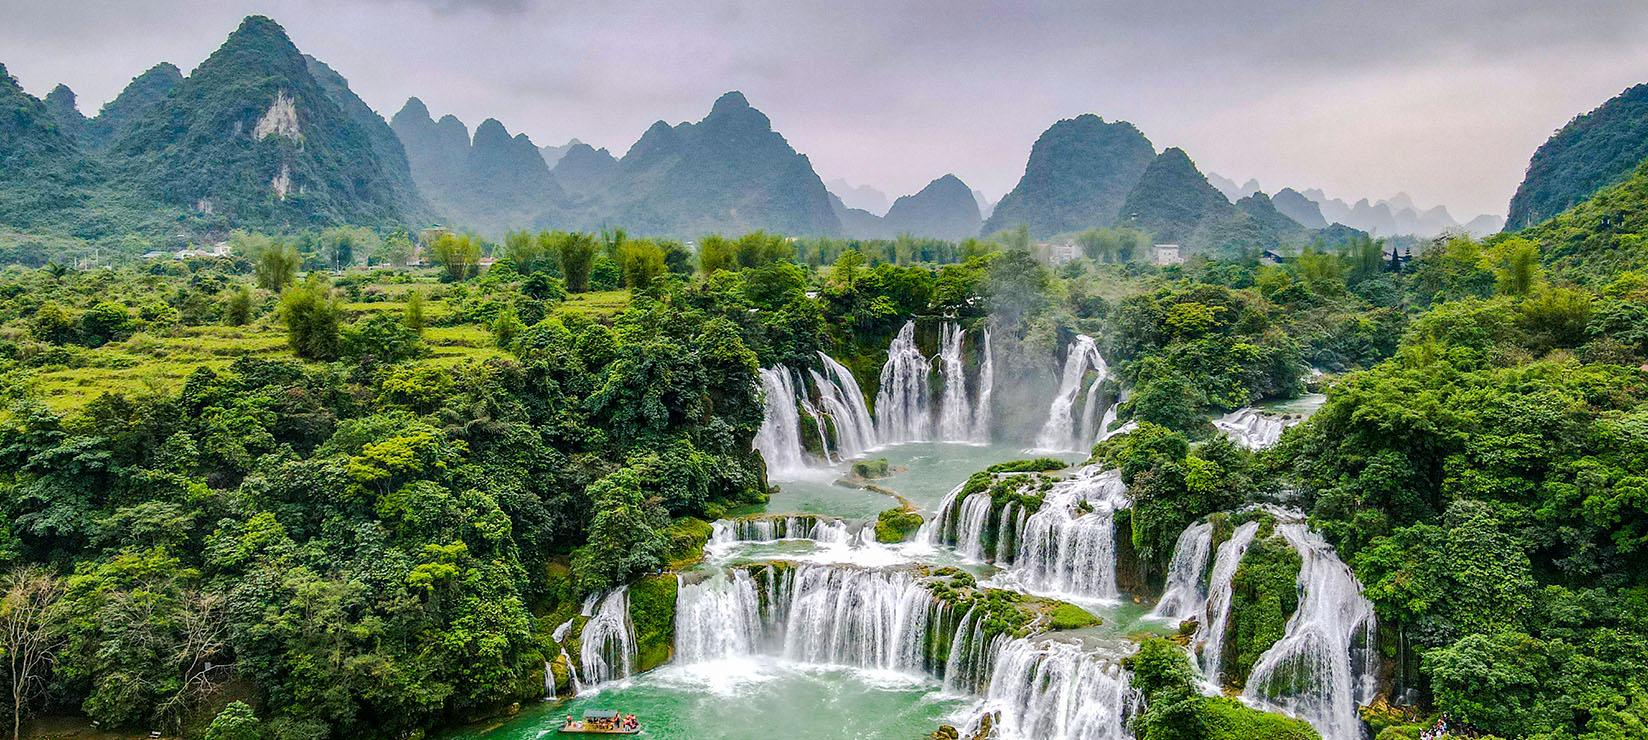 hanoi tours expert - travel vietnam